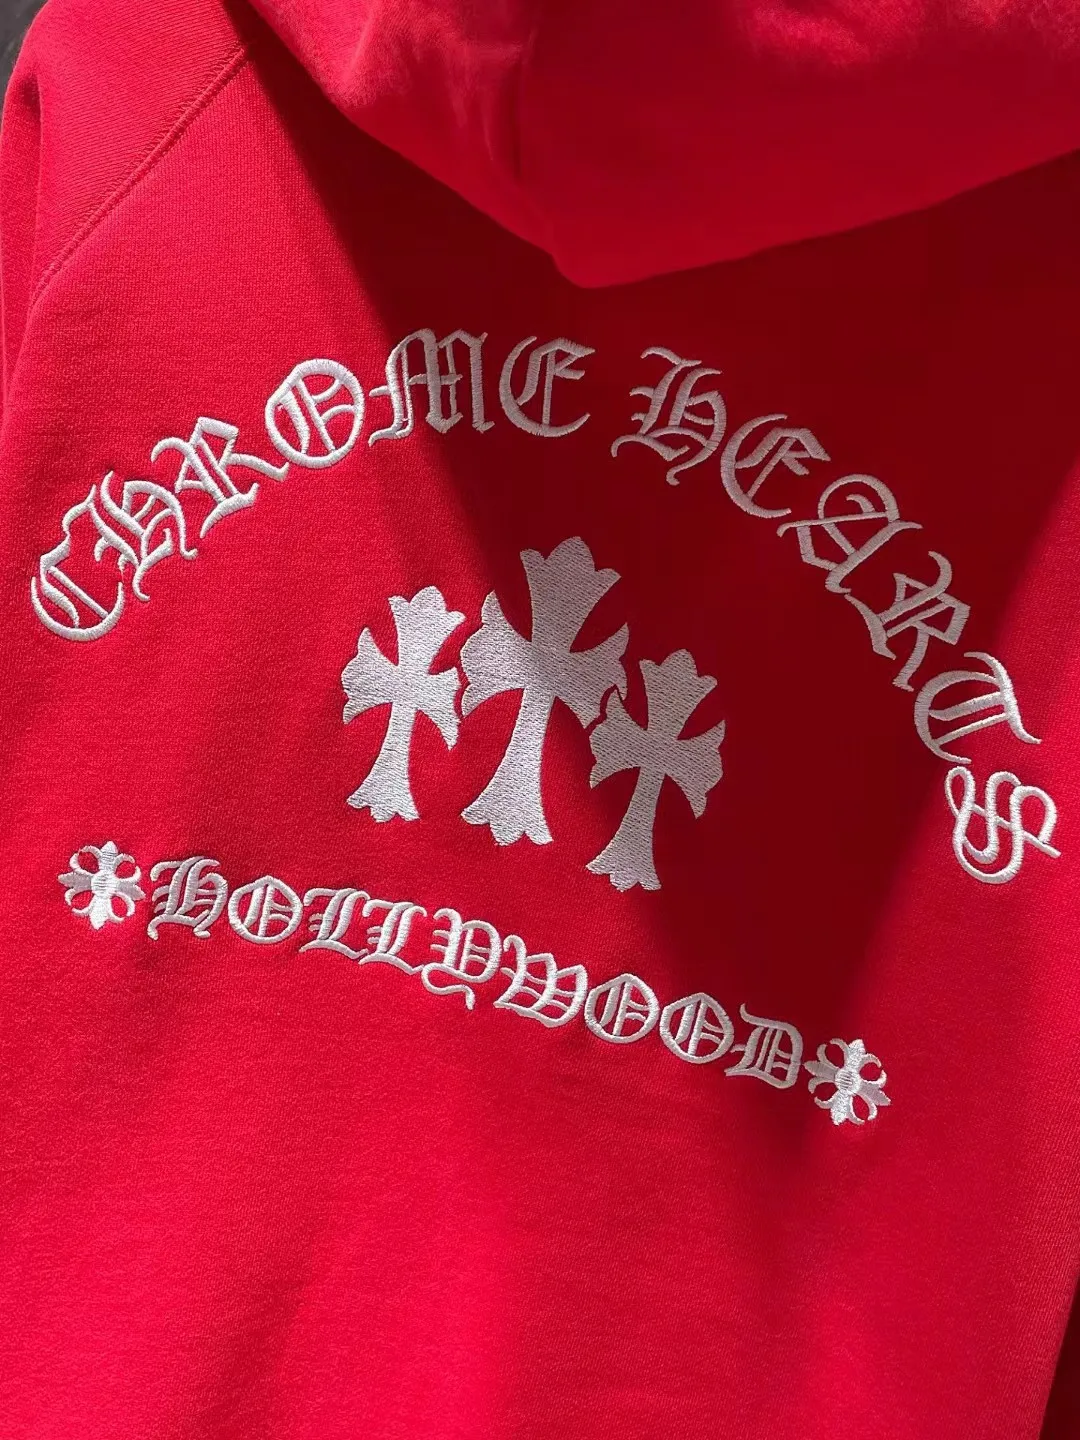 Wholesale Hearts Chrome Back Sanskrit Embroidery Hooded Jacket Hip-hop ...